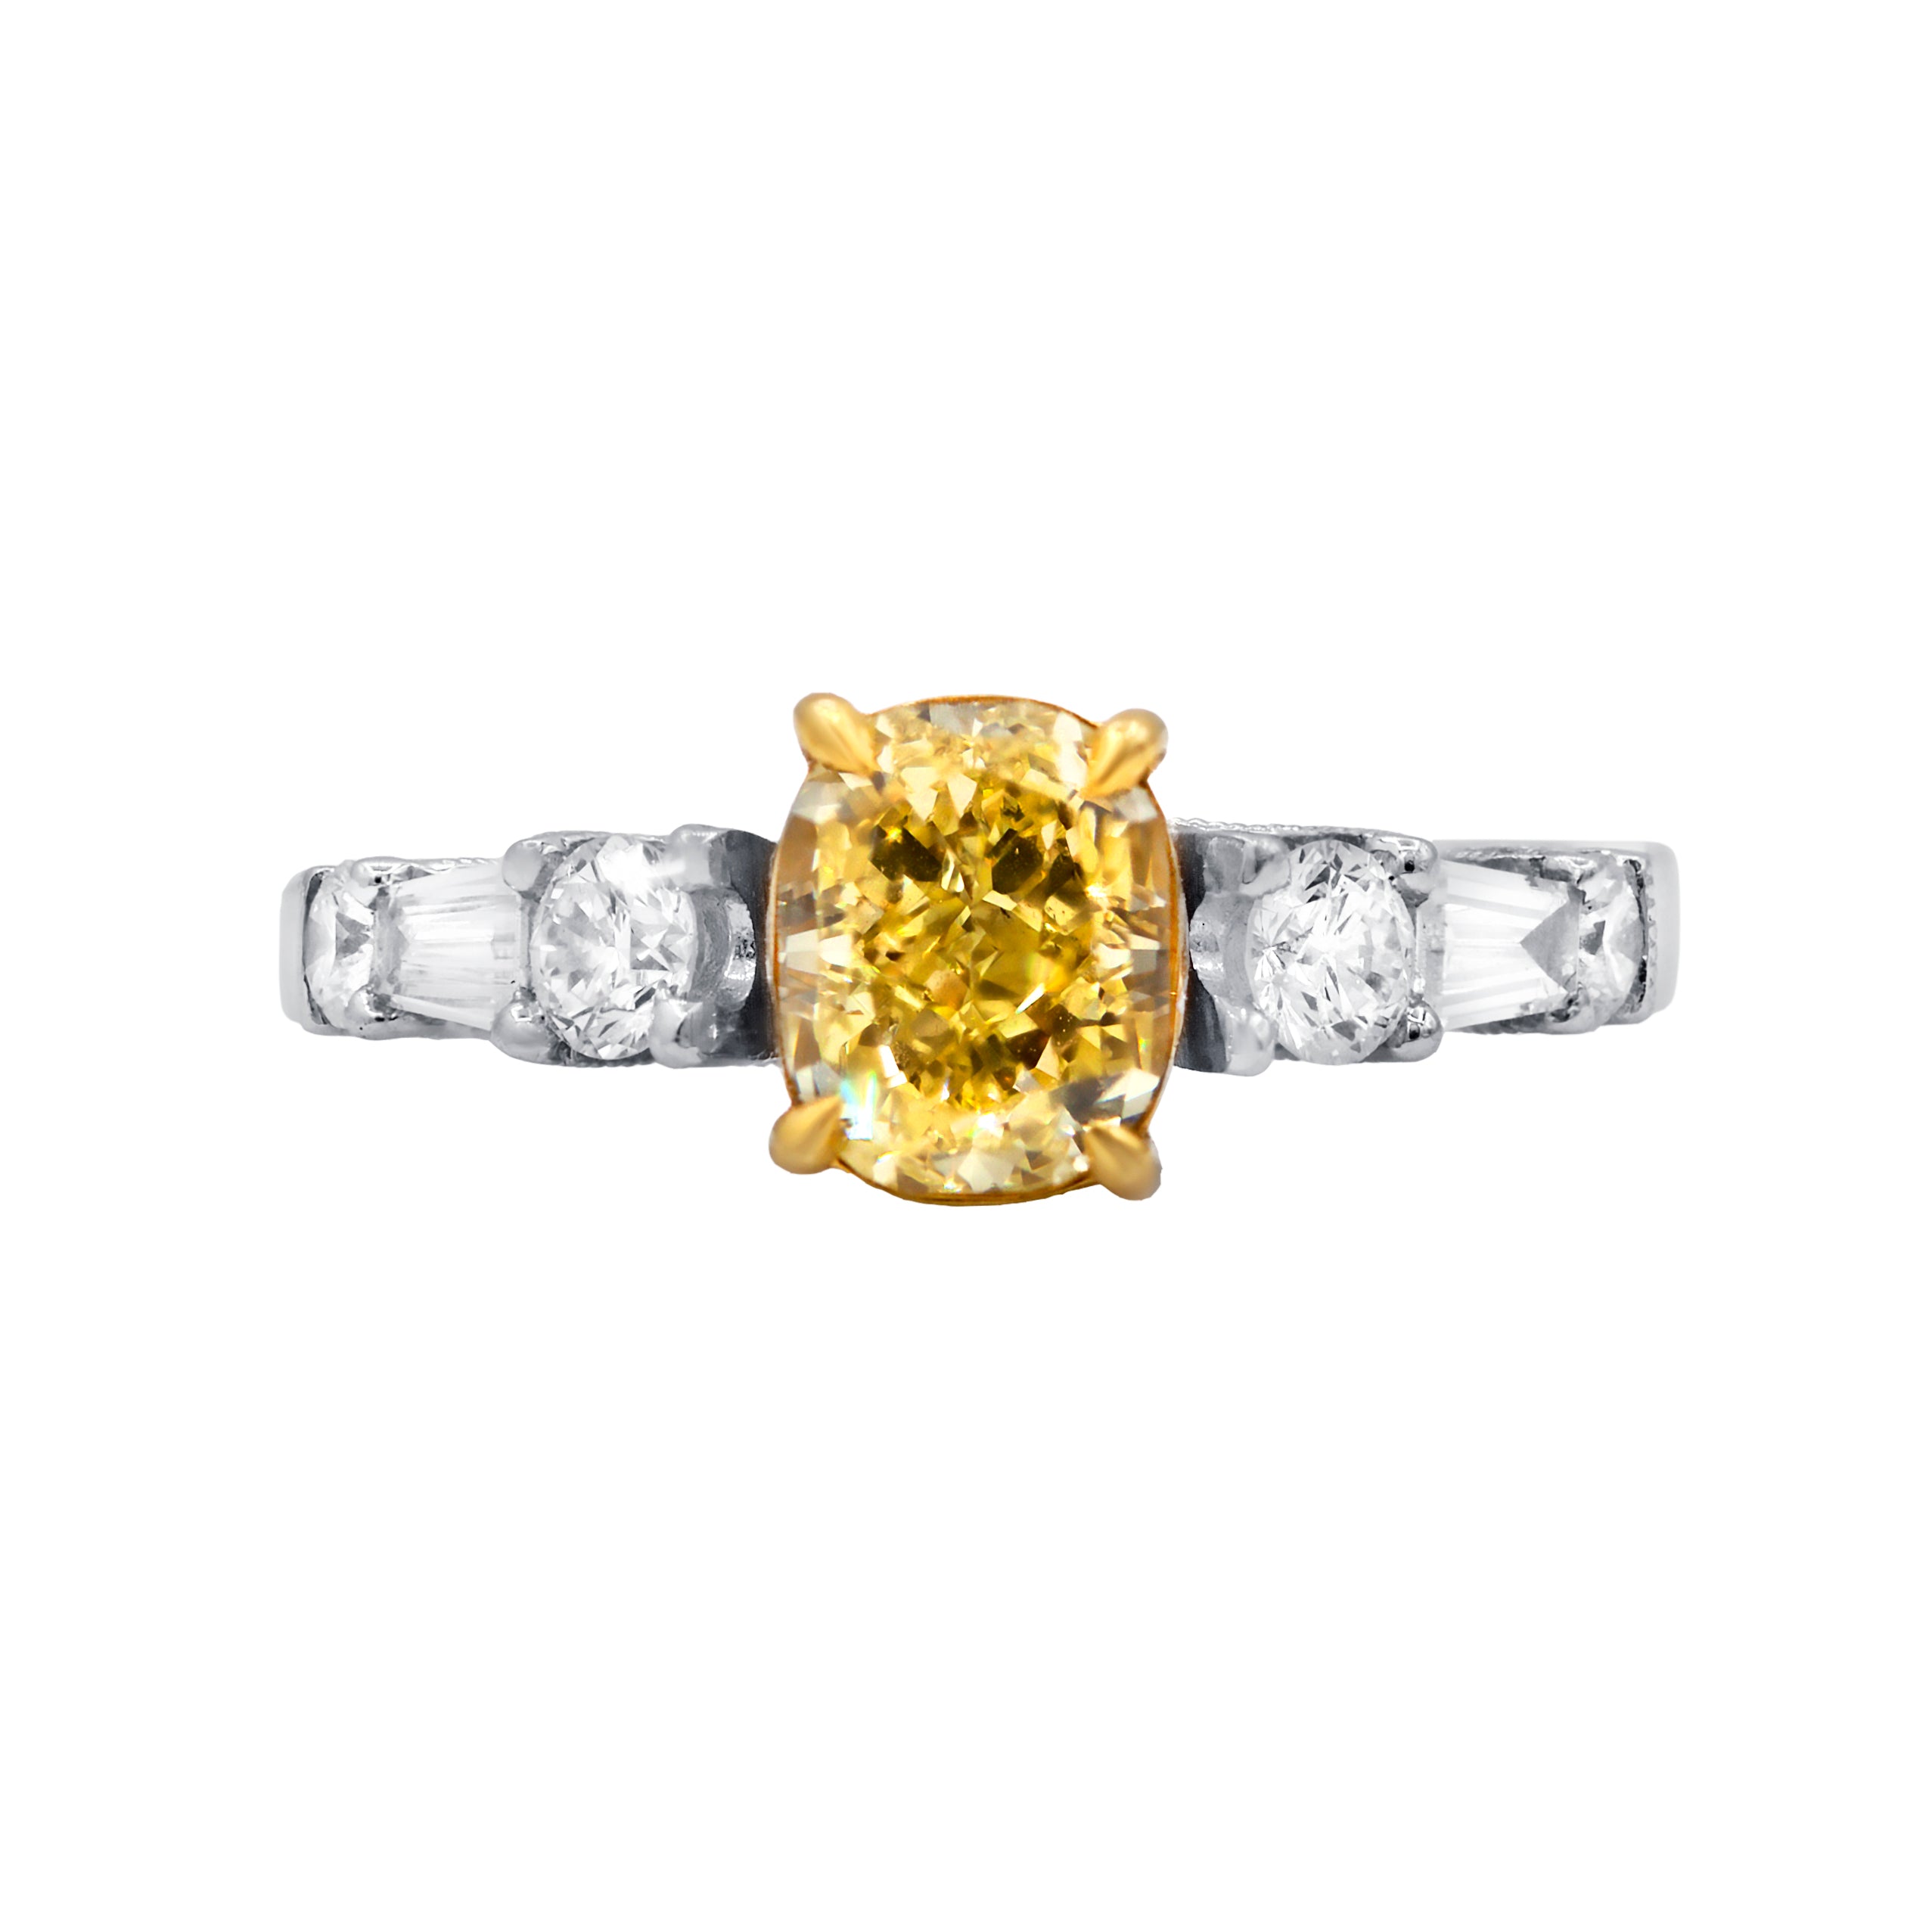 1.33ct Fancy Yellow Oval Diamond Ring